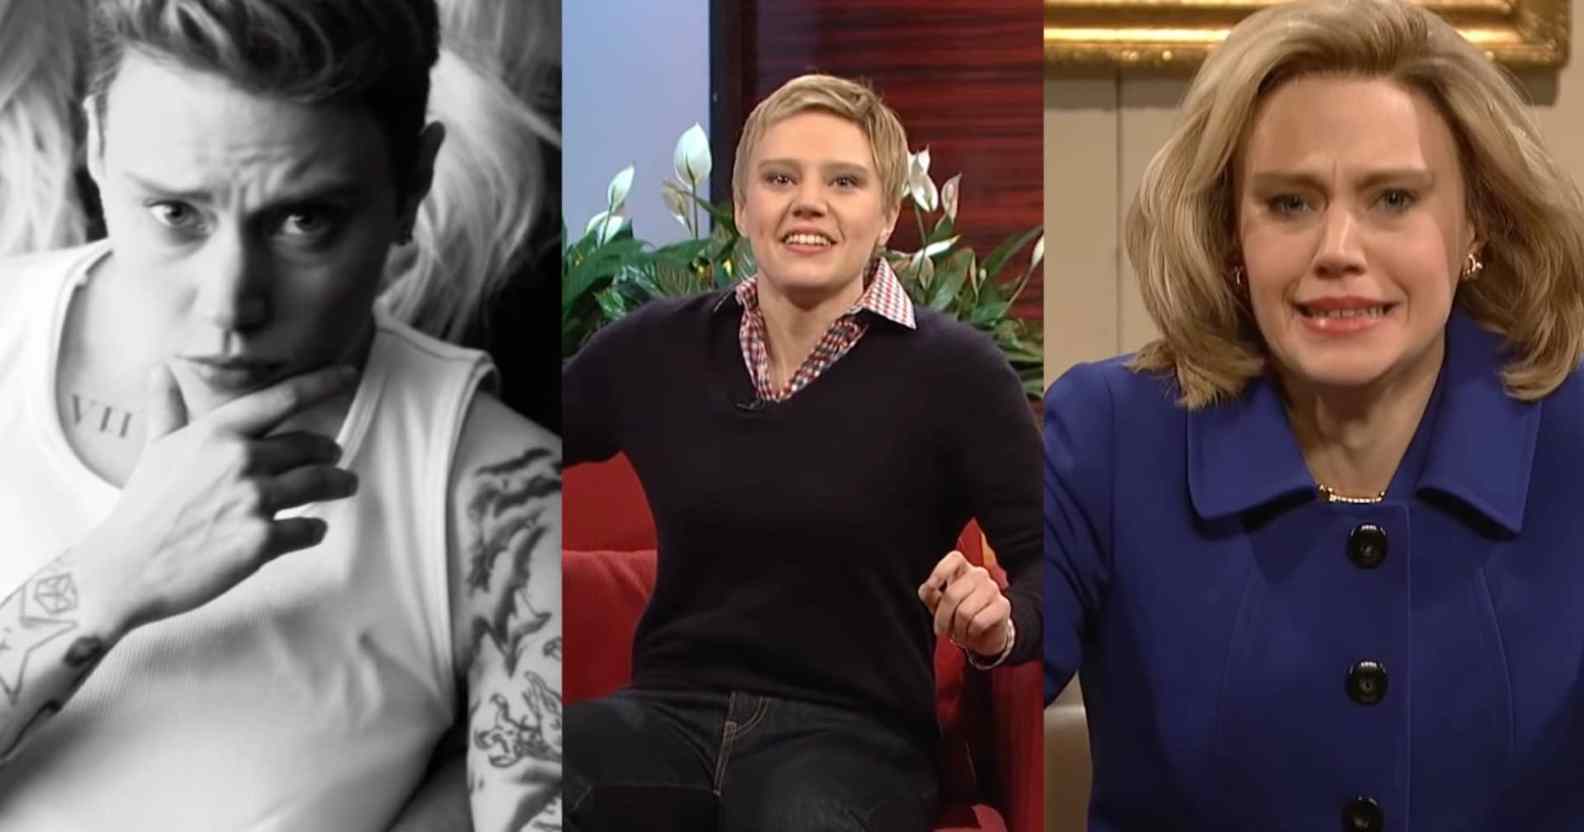 Kate McKinnon as Justin Bieber, Ellen DeGeneres and Hillary Clinton on SNL.